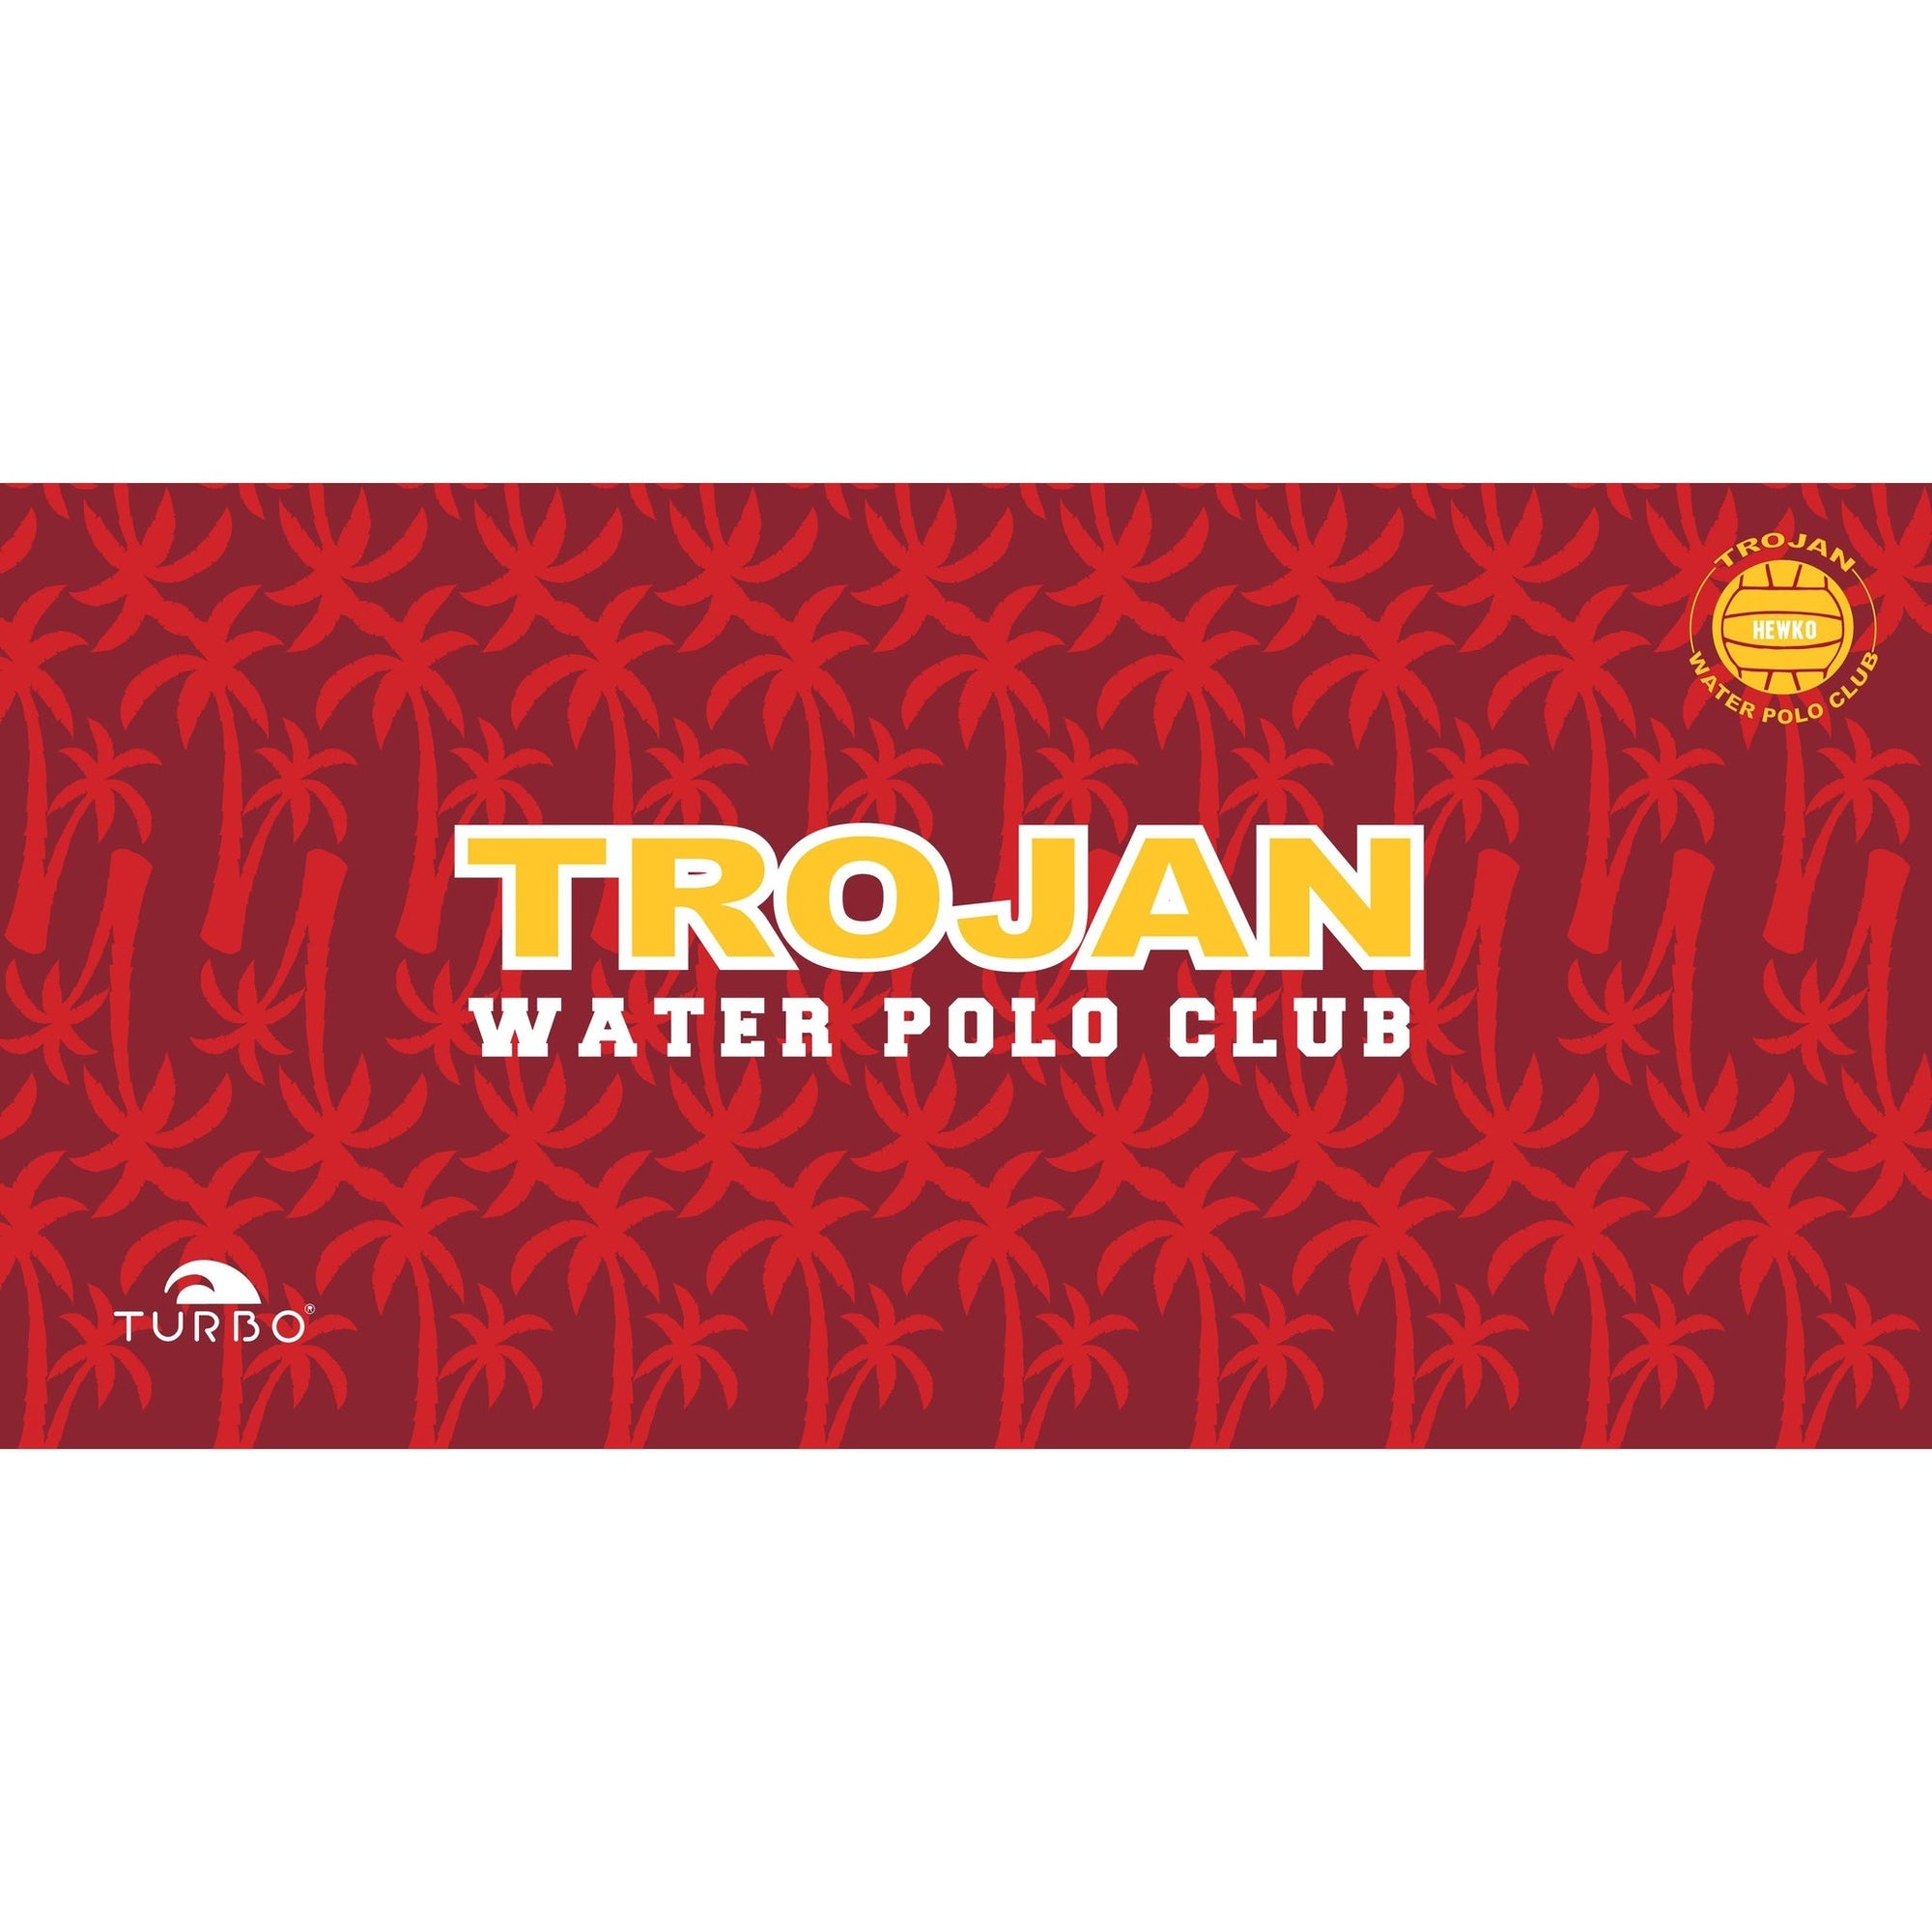 Trojan Water Polo Club Towel - with Name KAP7 International 